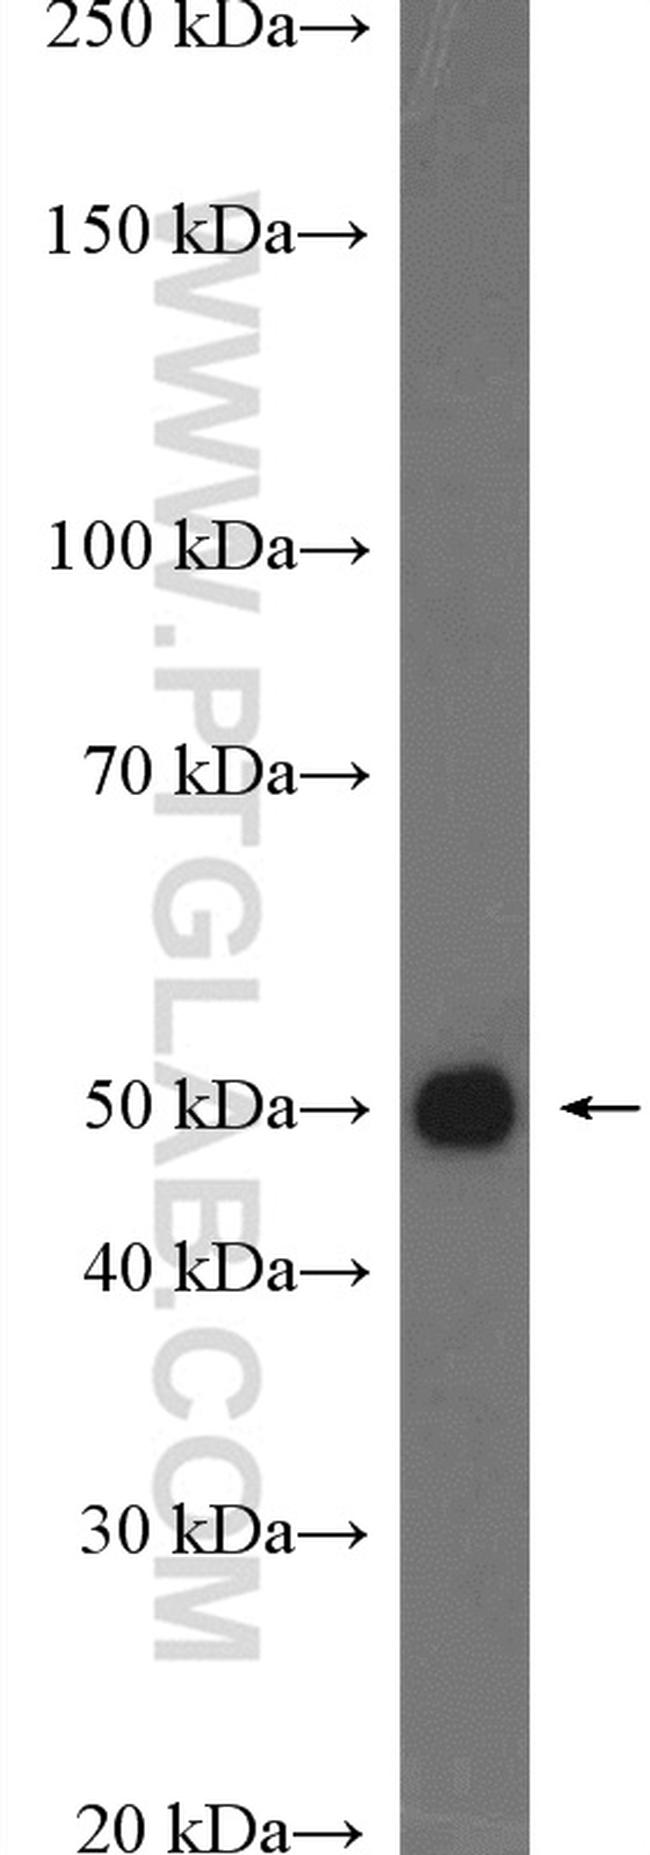 DUSP7/PYST2 Antibody in Western Blot (WB)